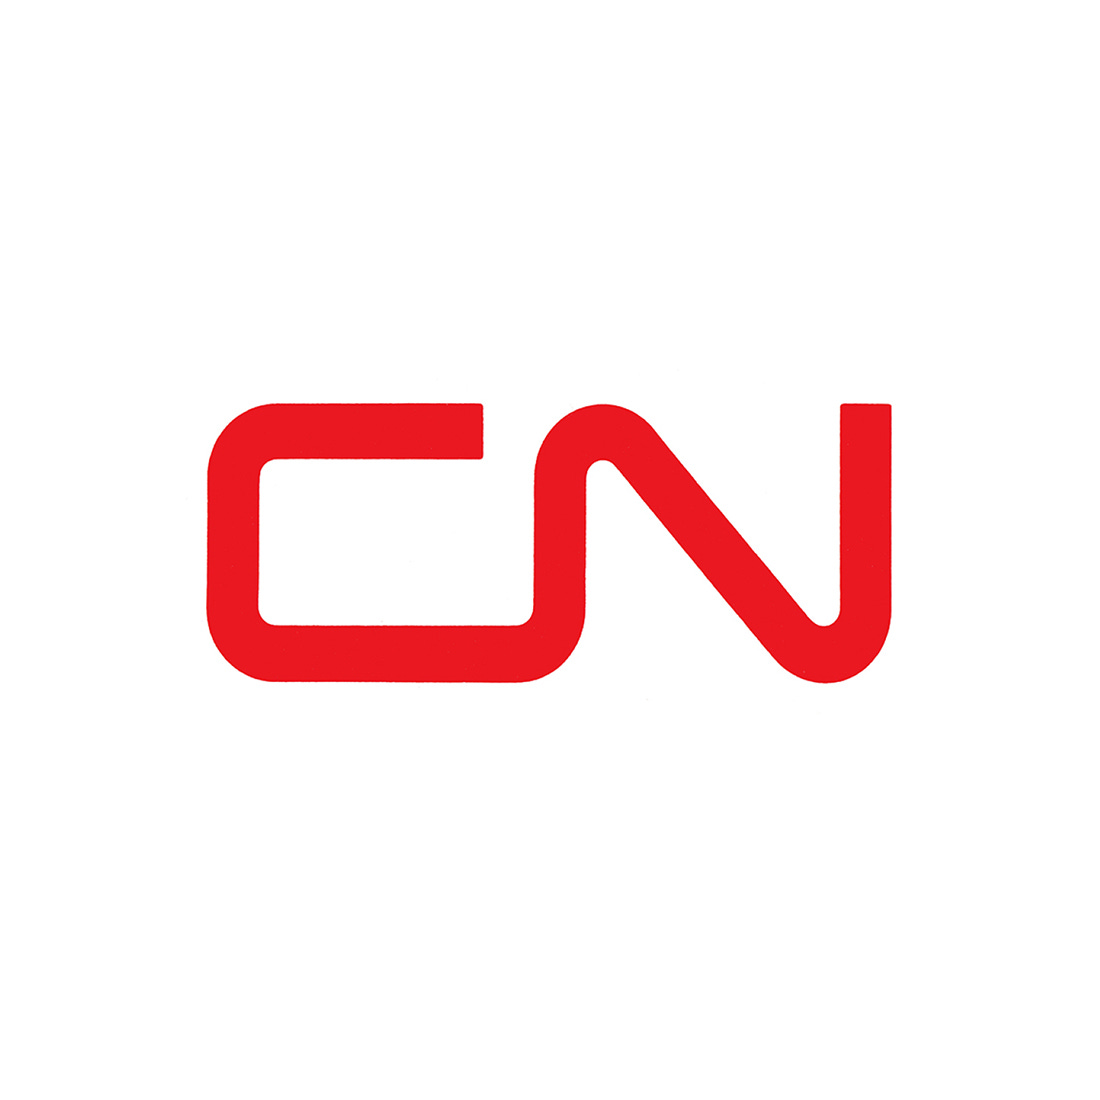 Allan Fleming's 1960 logo for Canadian National Railway